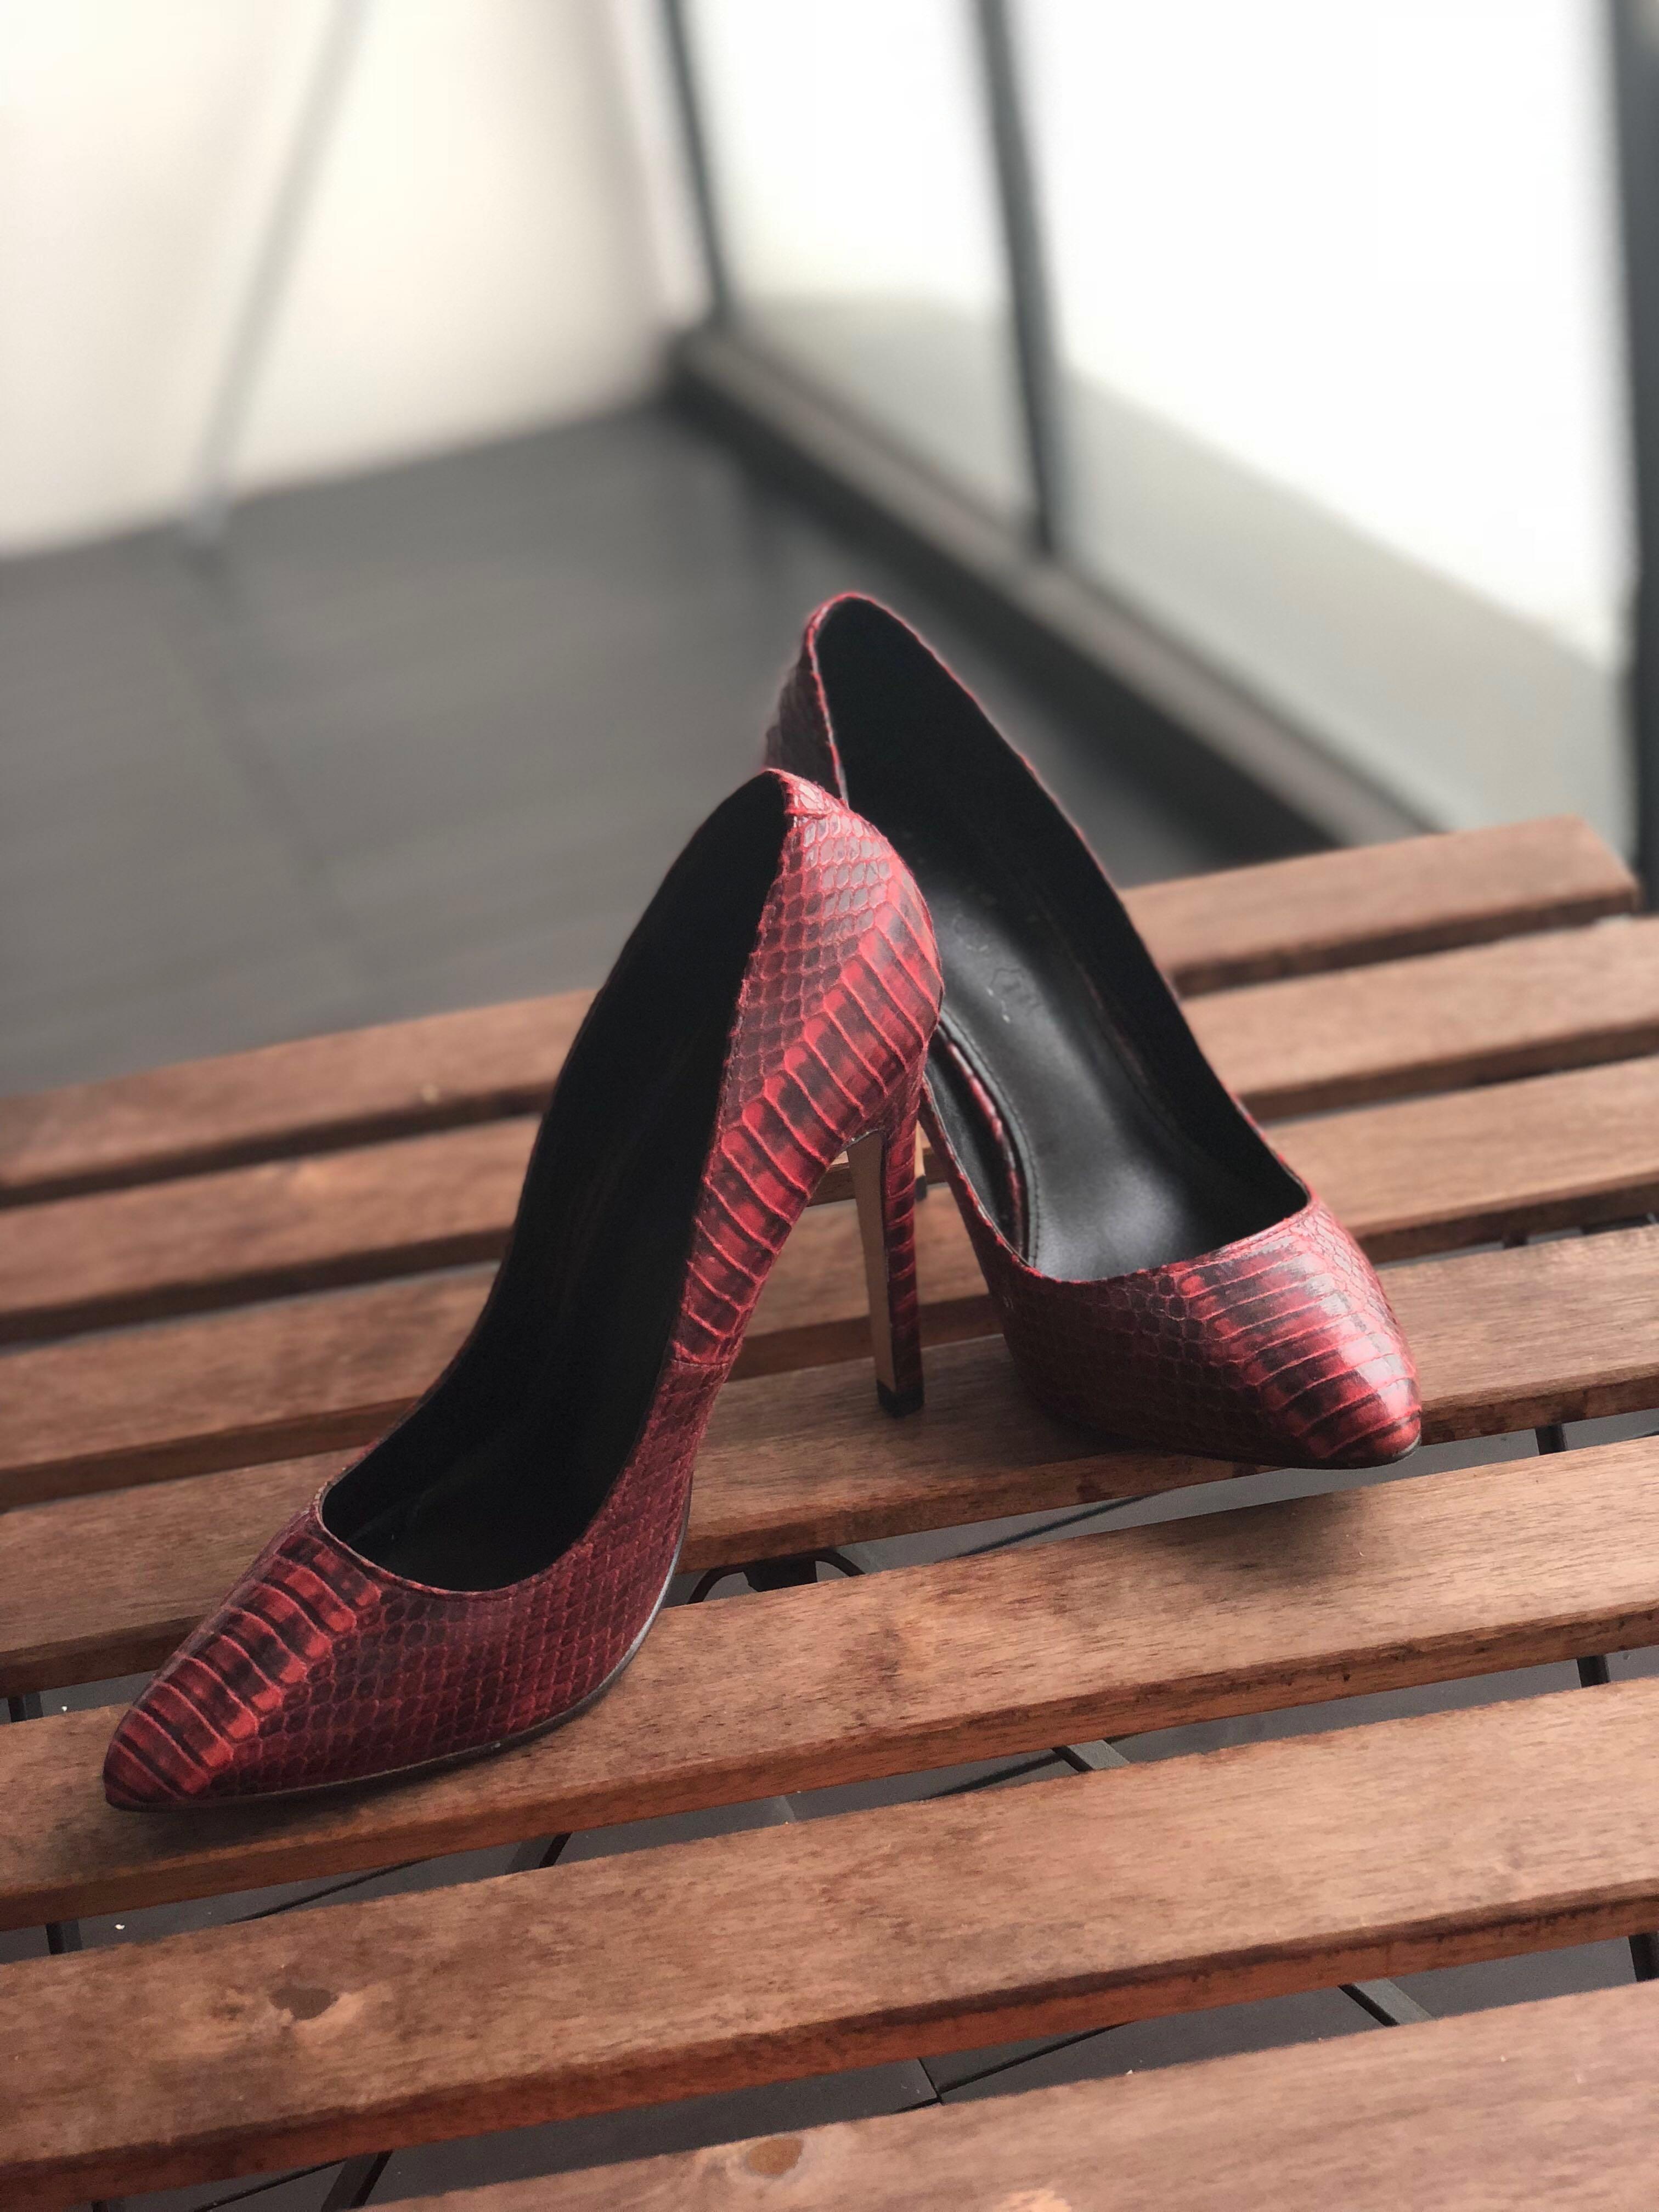 red snake heels